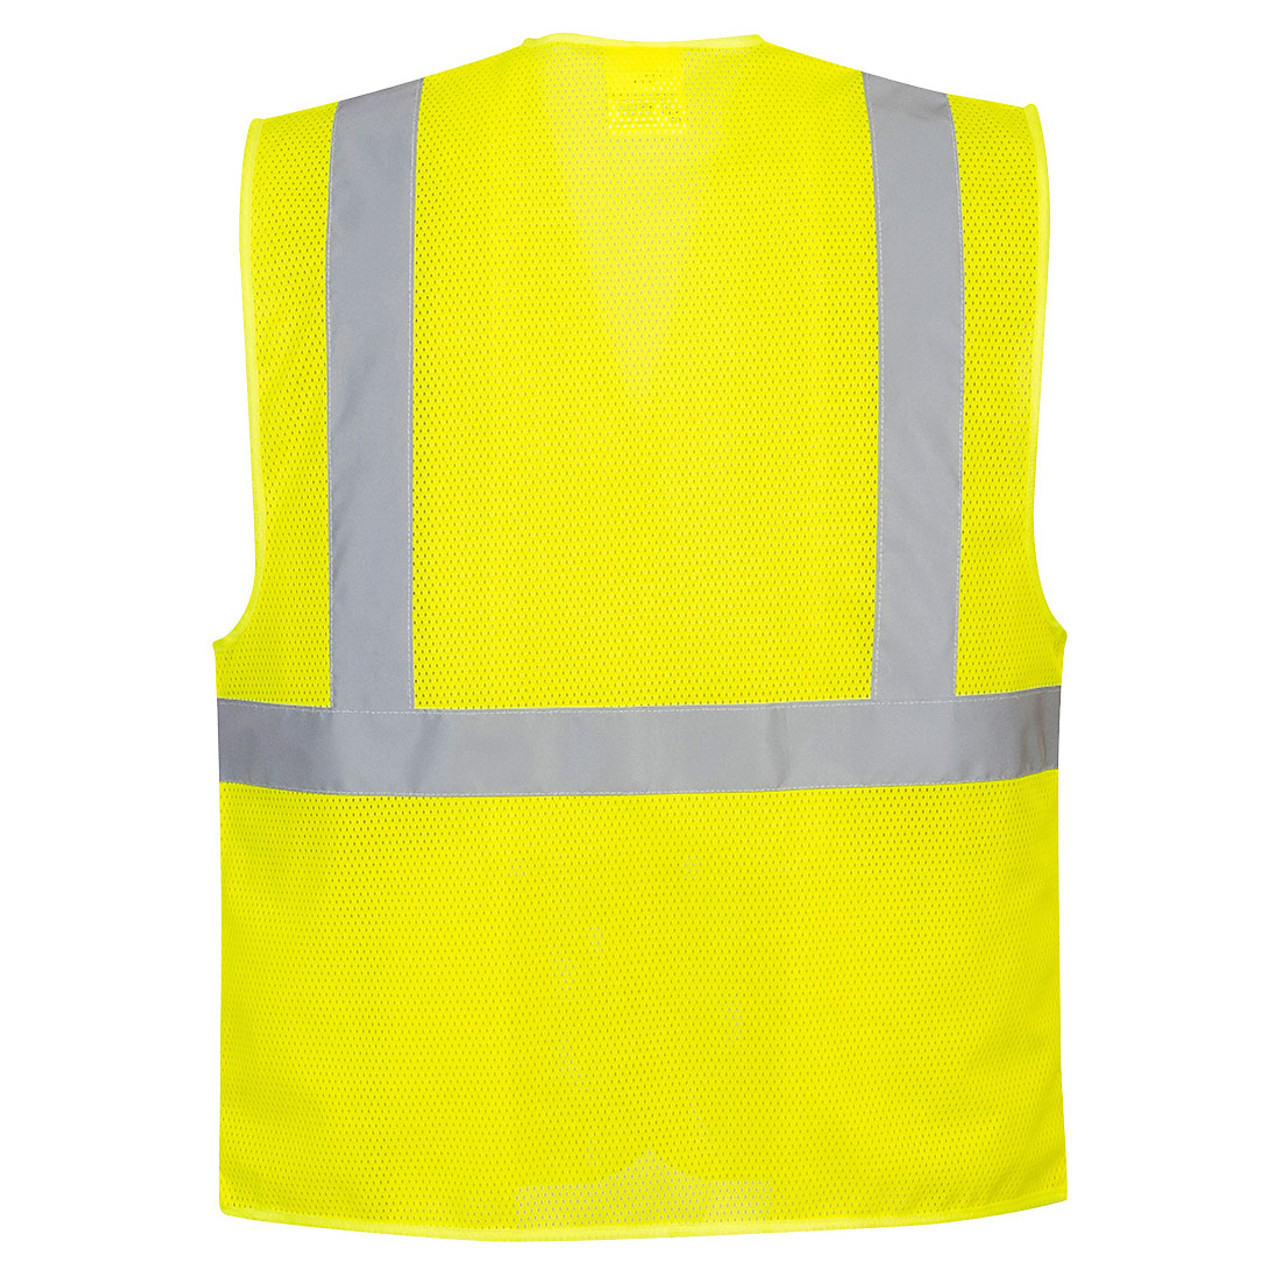 UC492 - Economy Hi-Vis Band and Brace Vest Yellow